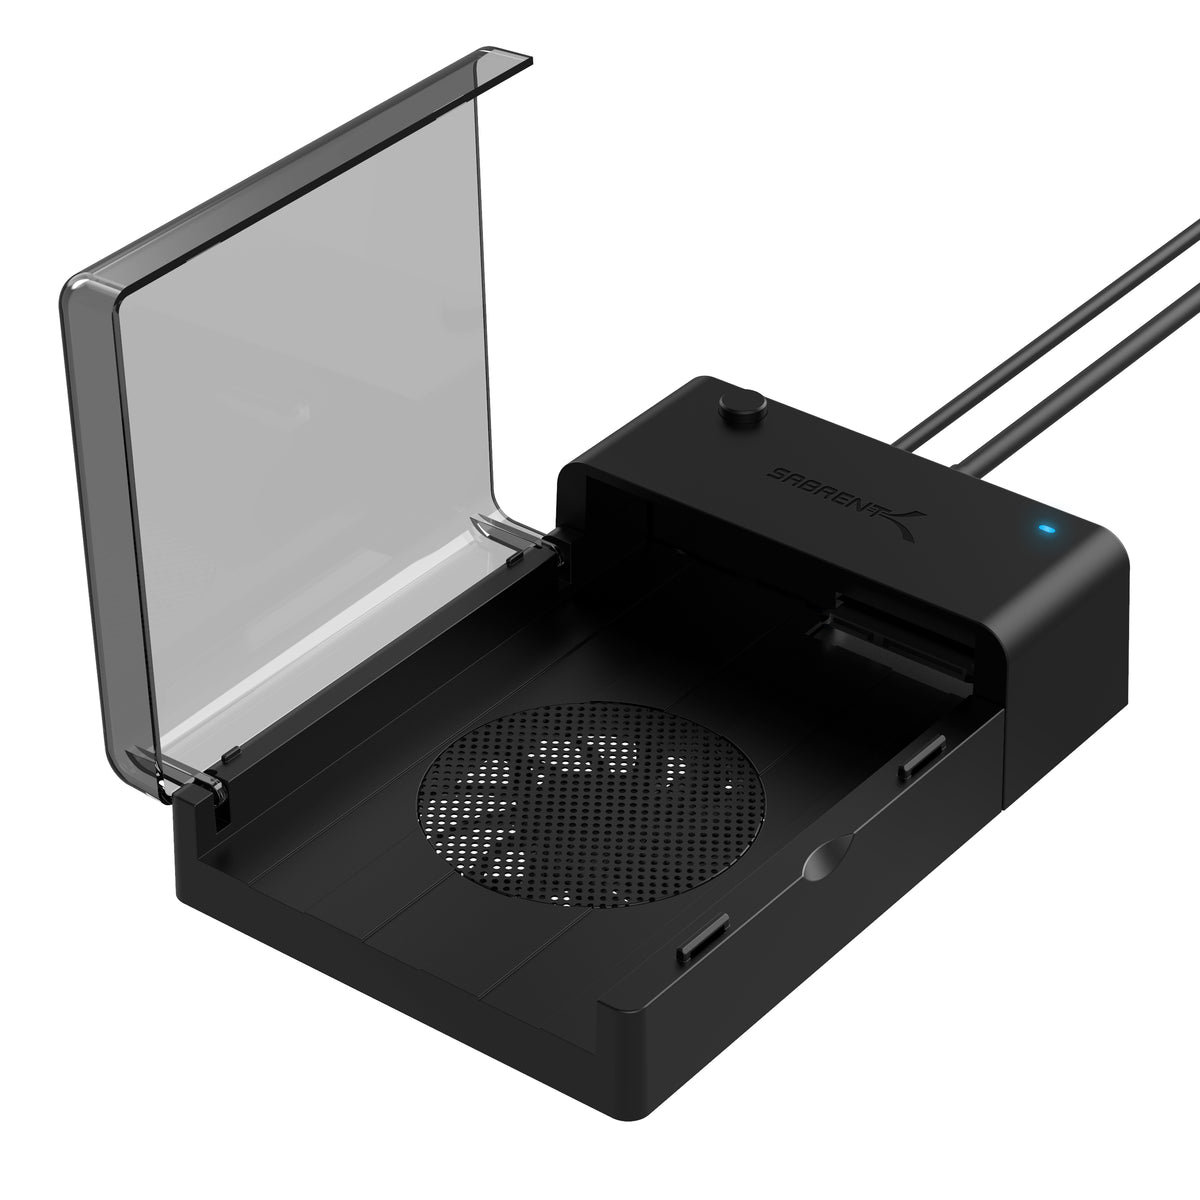 USB 3.0 to SATA External Hard Drive Docking Station